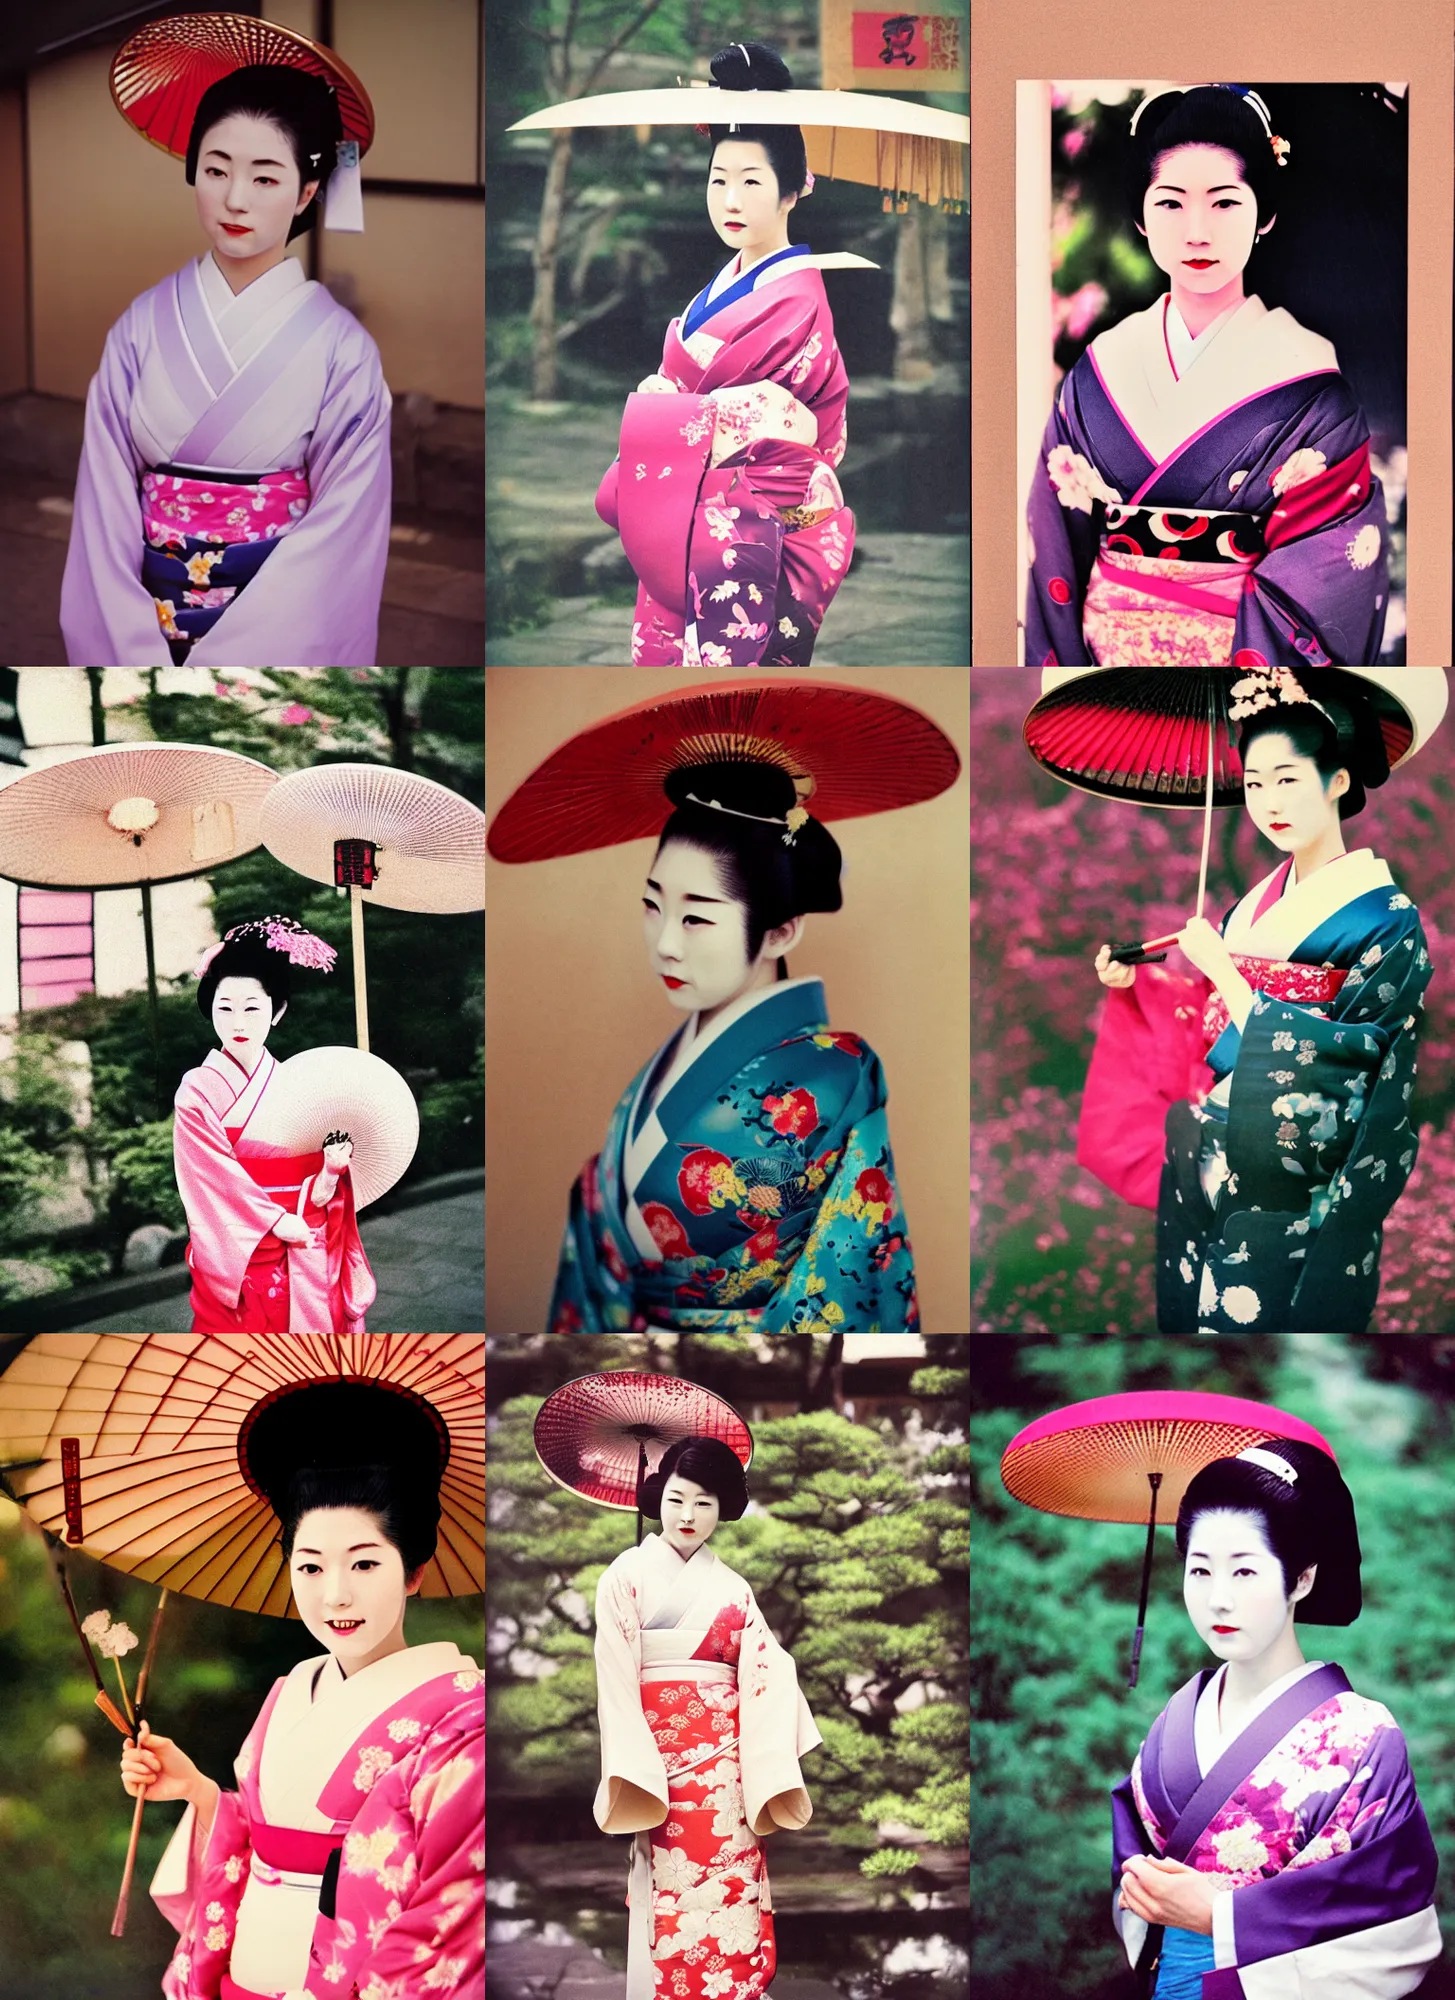 Prompt: Portrait Photograph of a Japanese Geisha Kodak Hawkeye Super Color